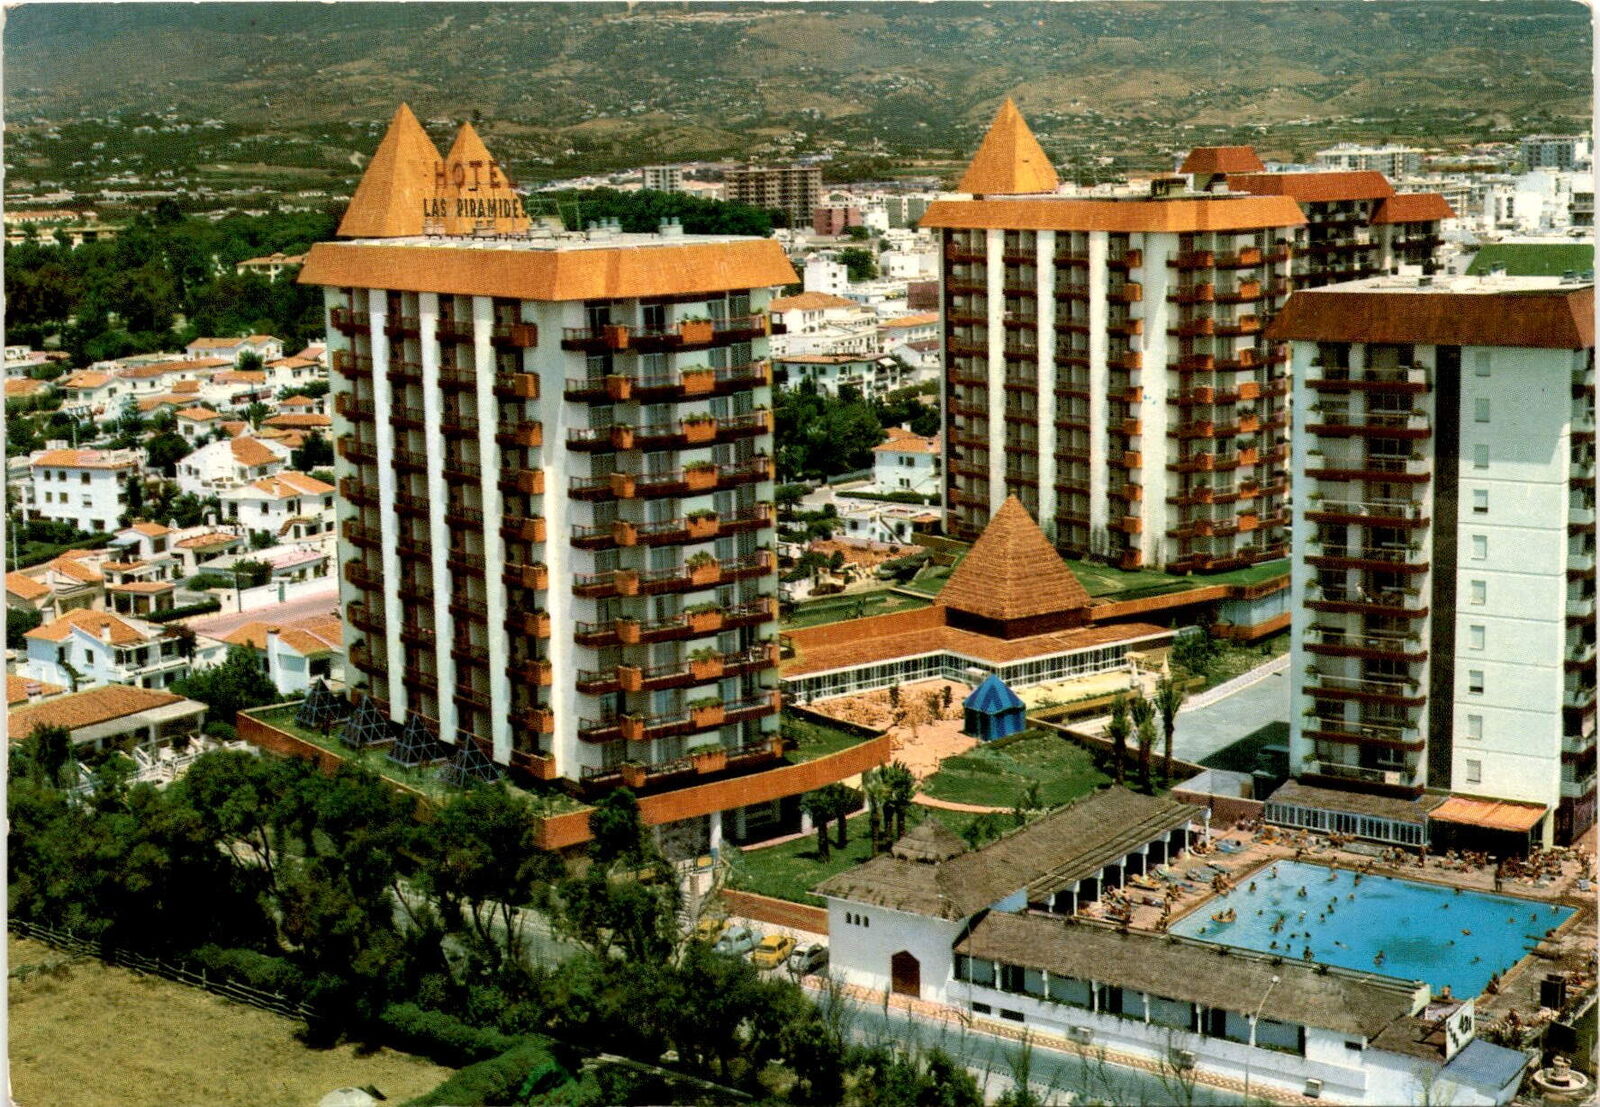 Hotel Las Piramides, Fuengirola, Costa del Sol, Spain. Postcard